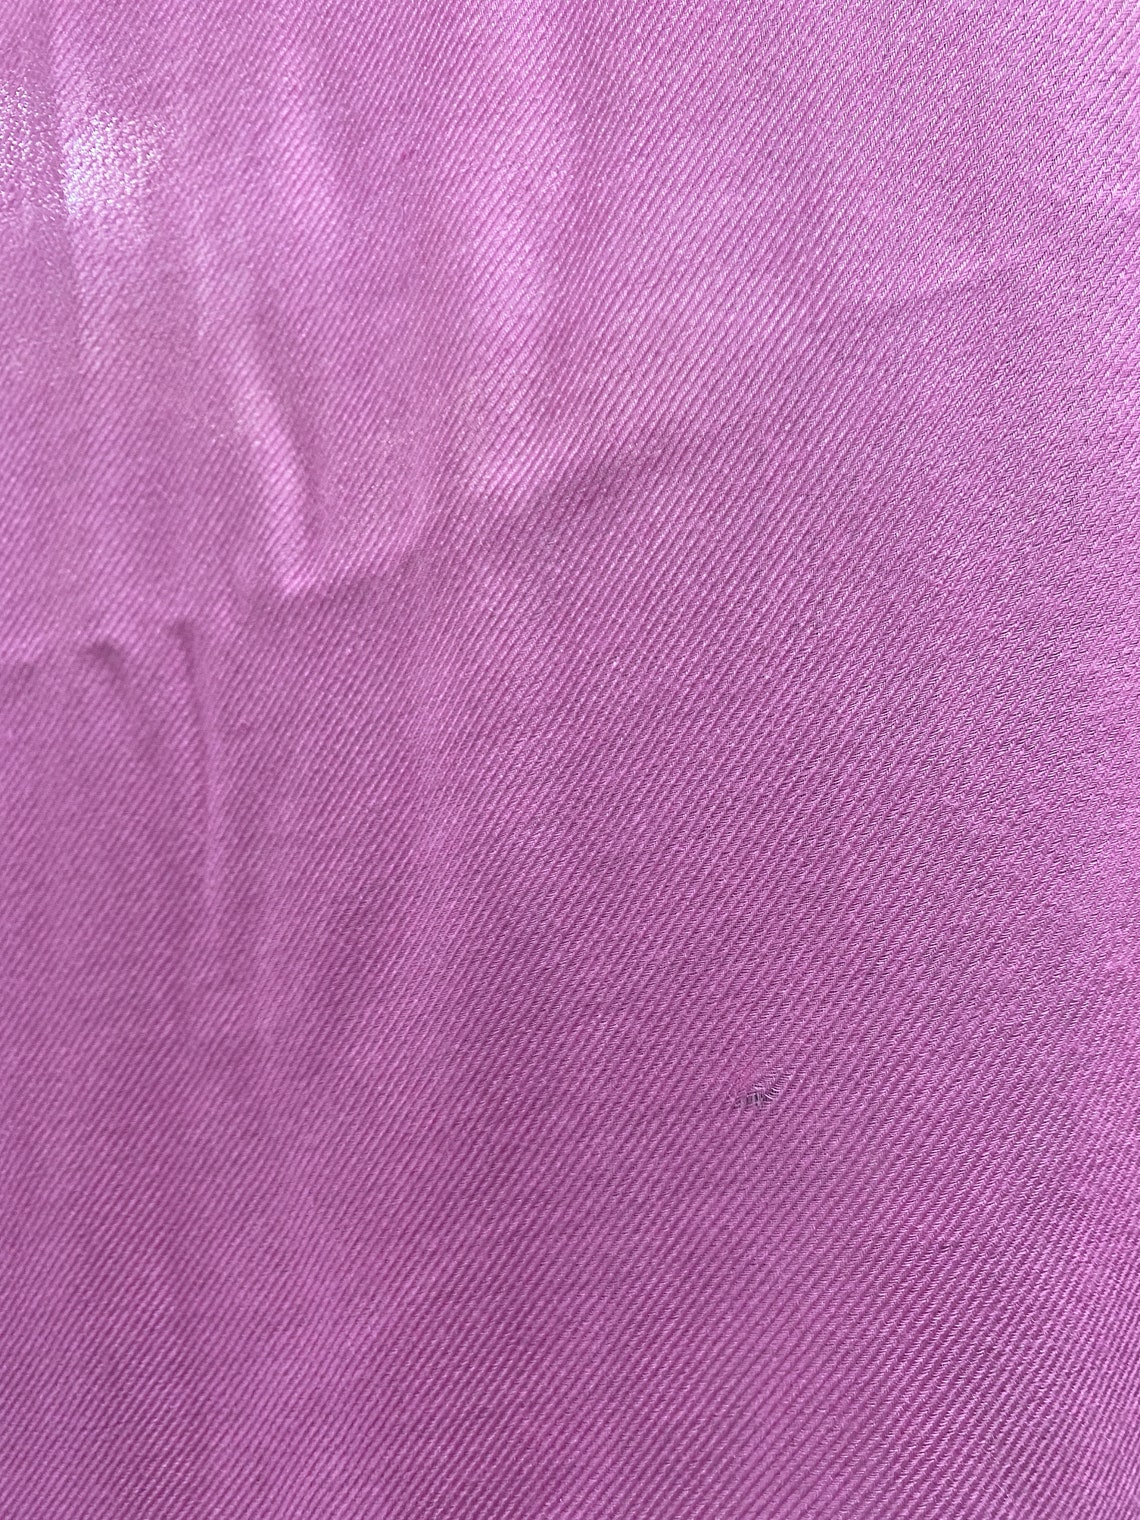 Loro Piana Pink Pashmina Scarf Cashmere and silk | Etsy